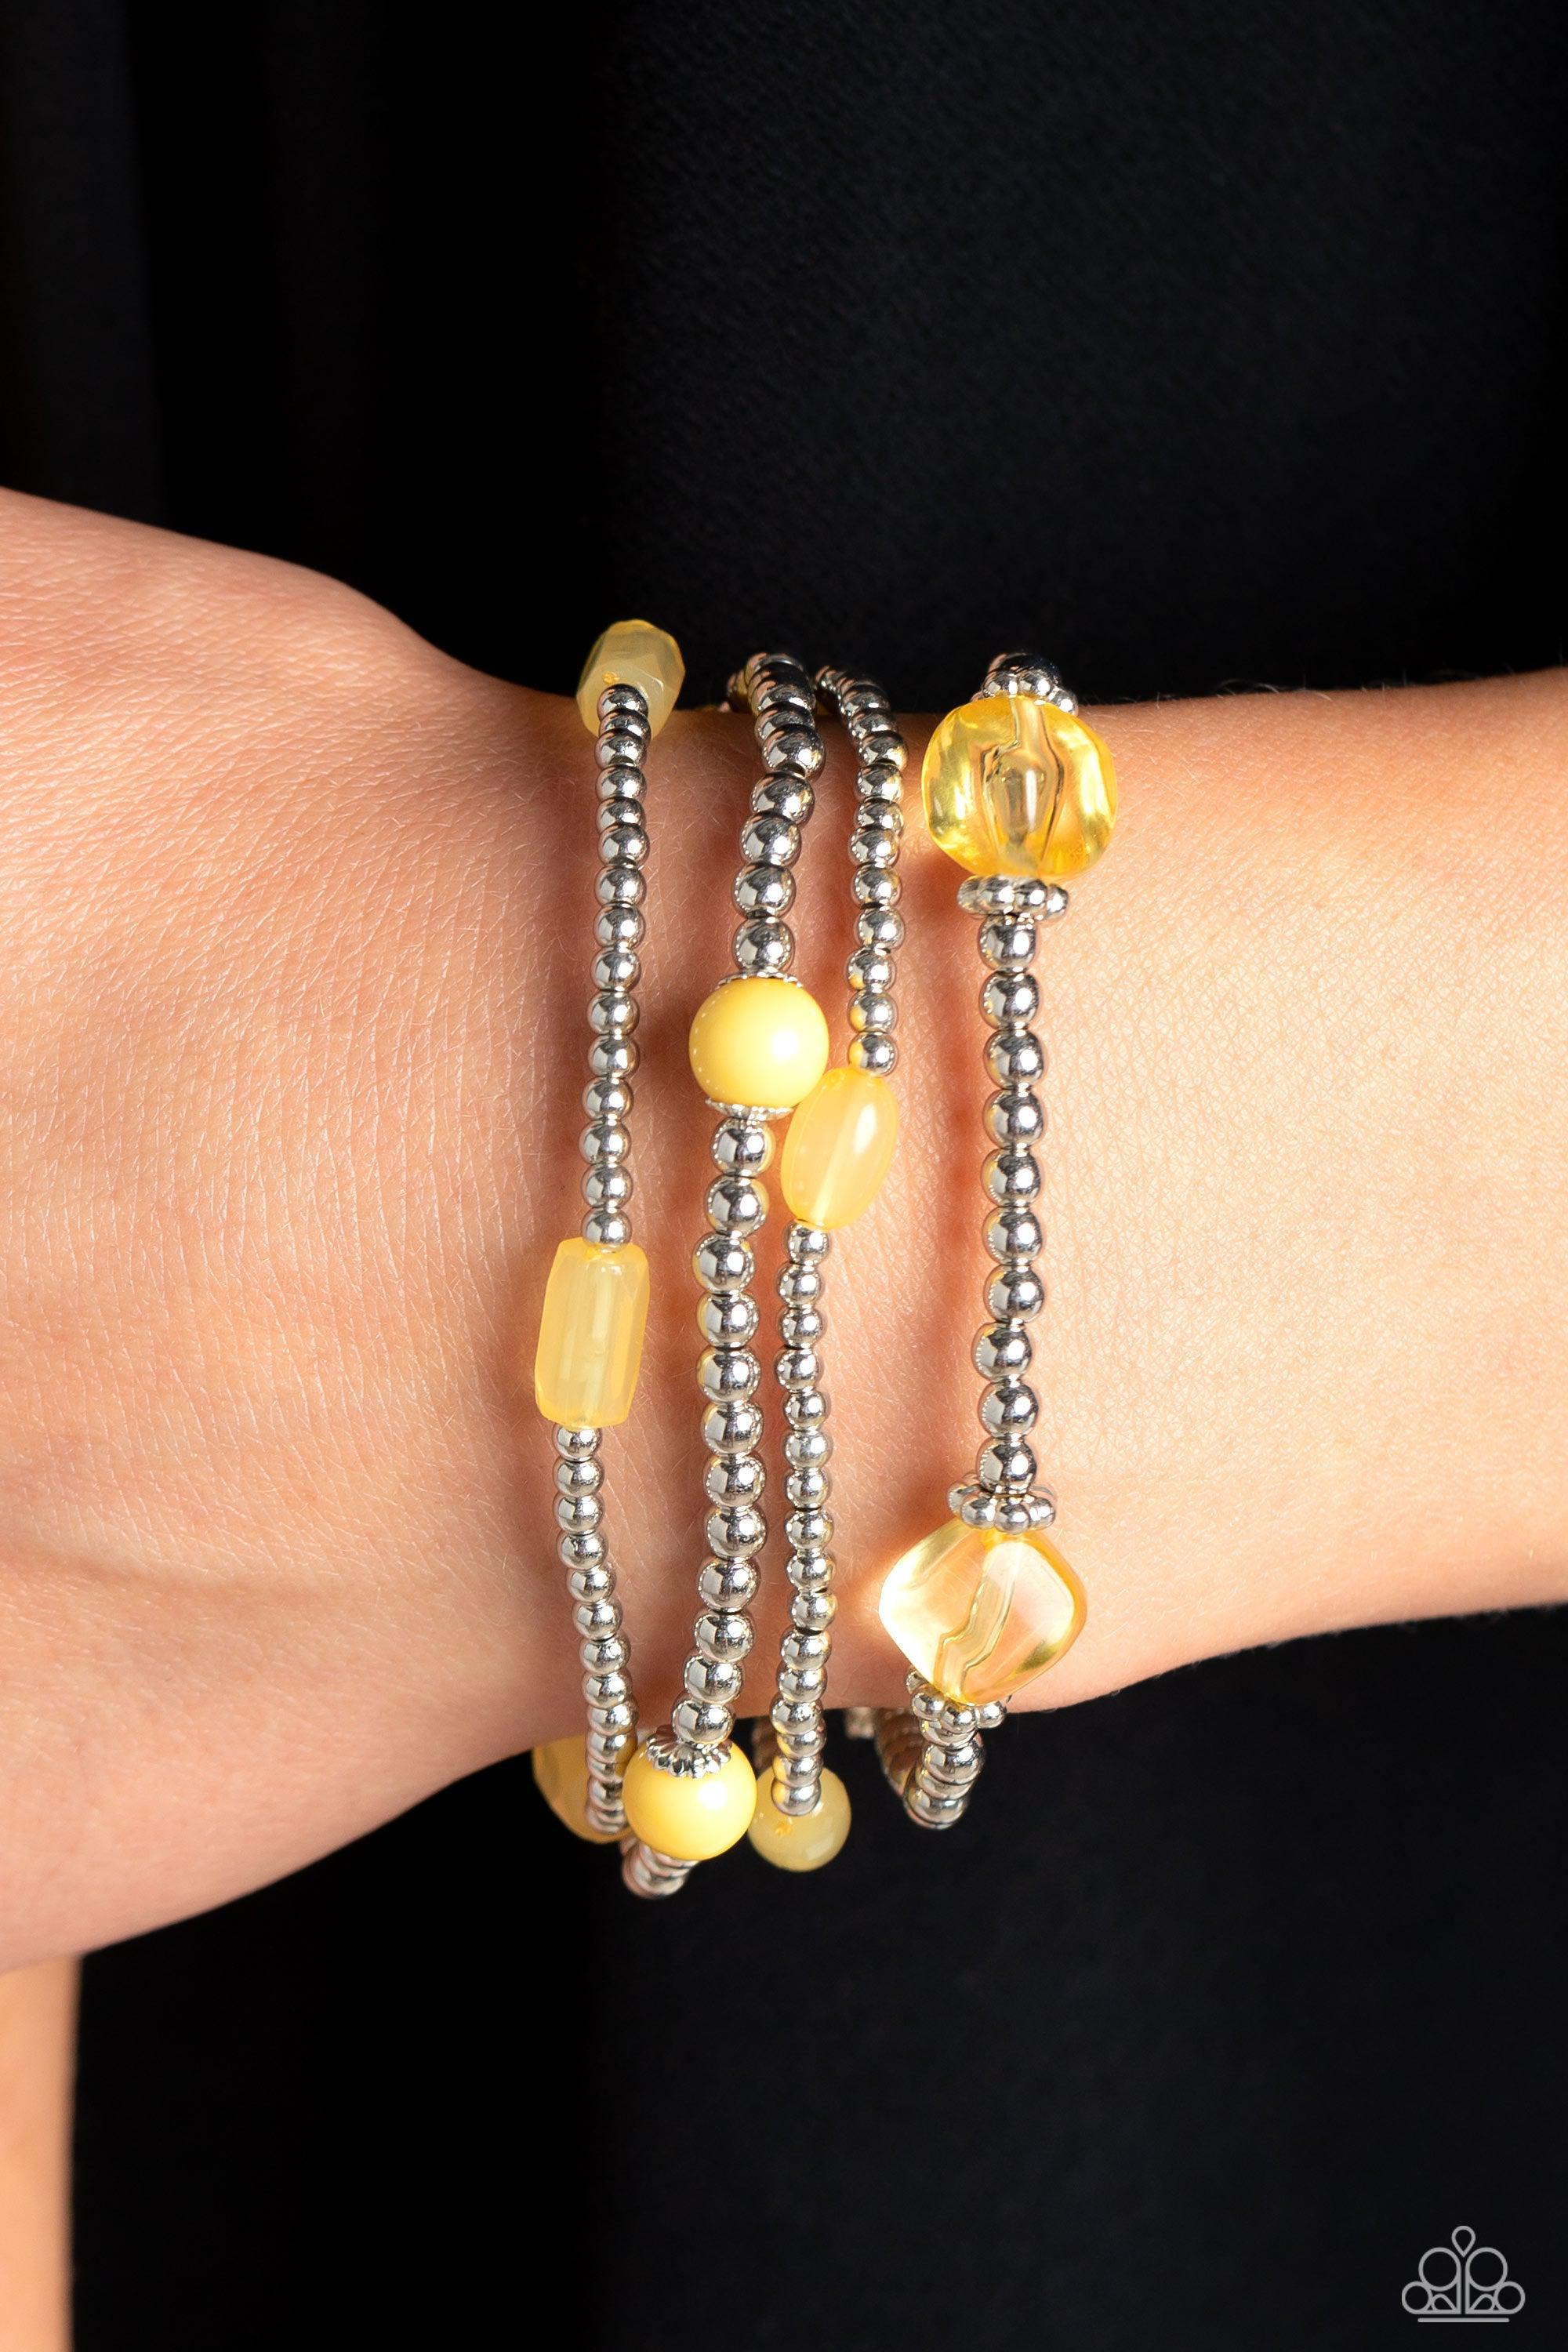 Geometric Guru Yellow Bracelet- lightbox - CarasShop.com - $5 Jewelry by Cara Jewels